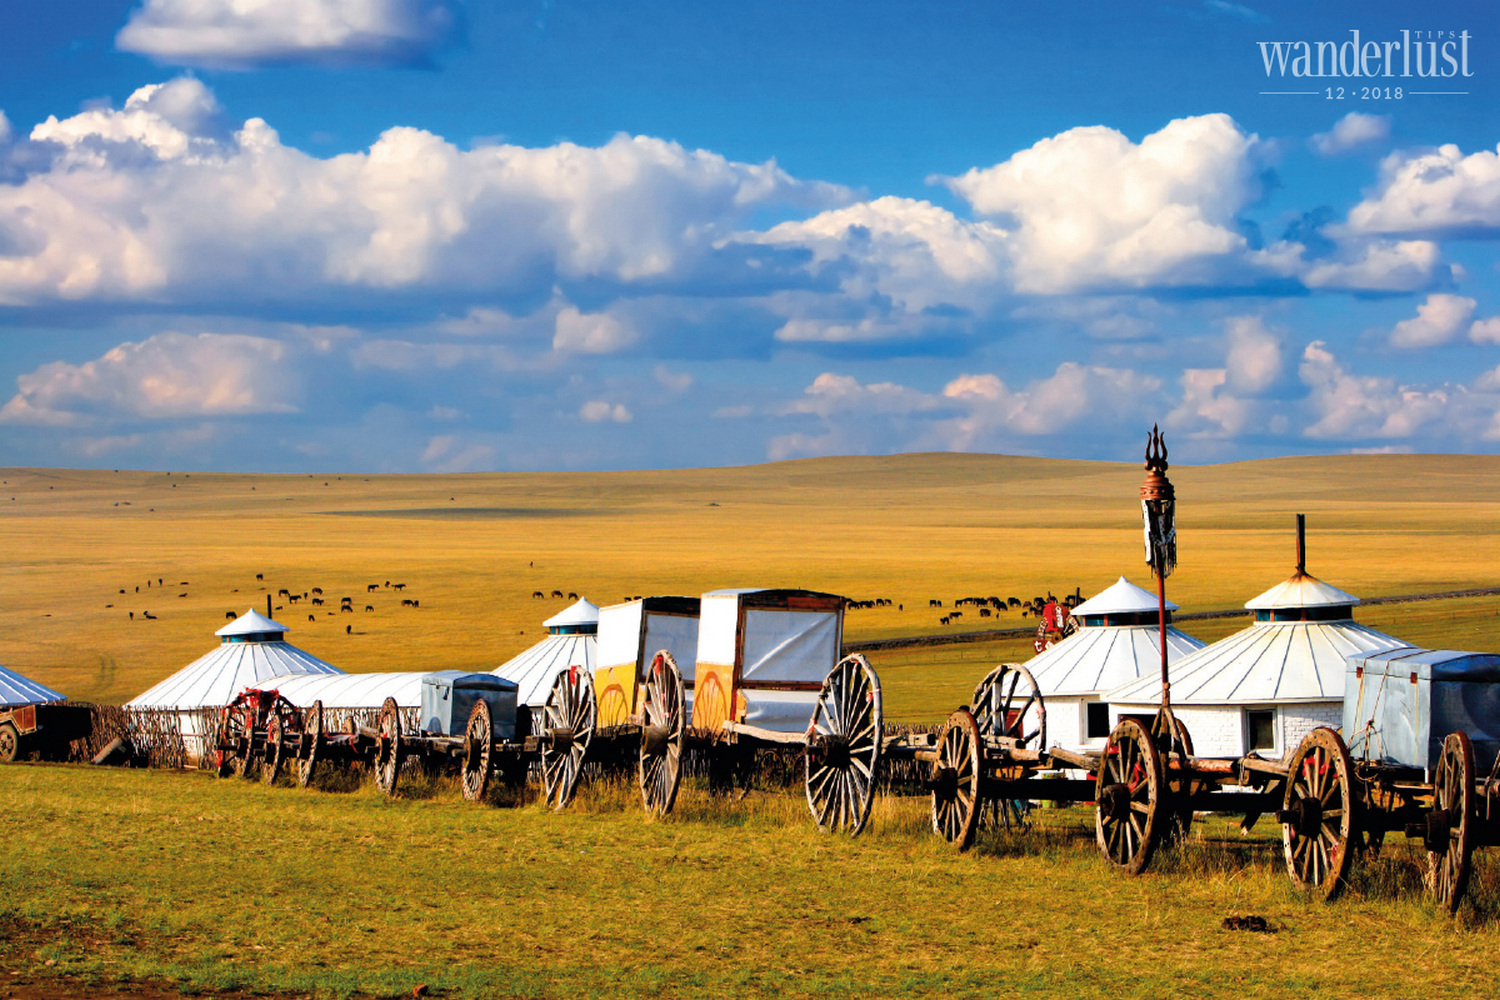 Wanderlust Tips Magazine | The unique yurt tent of the Mongols